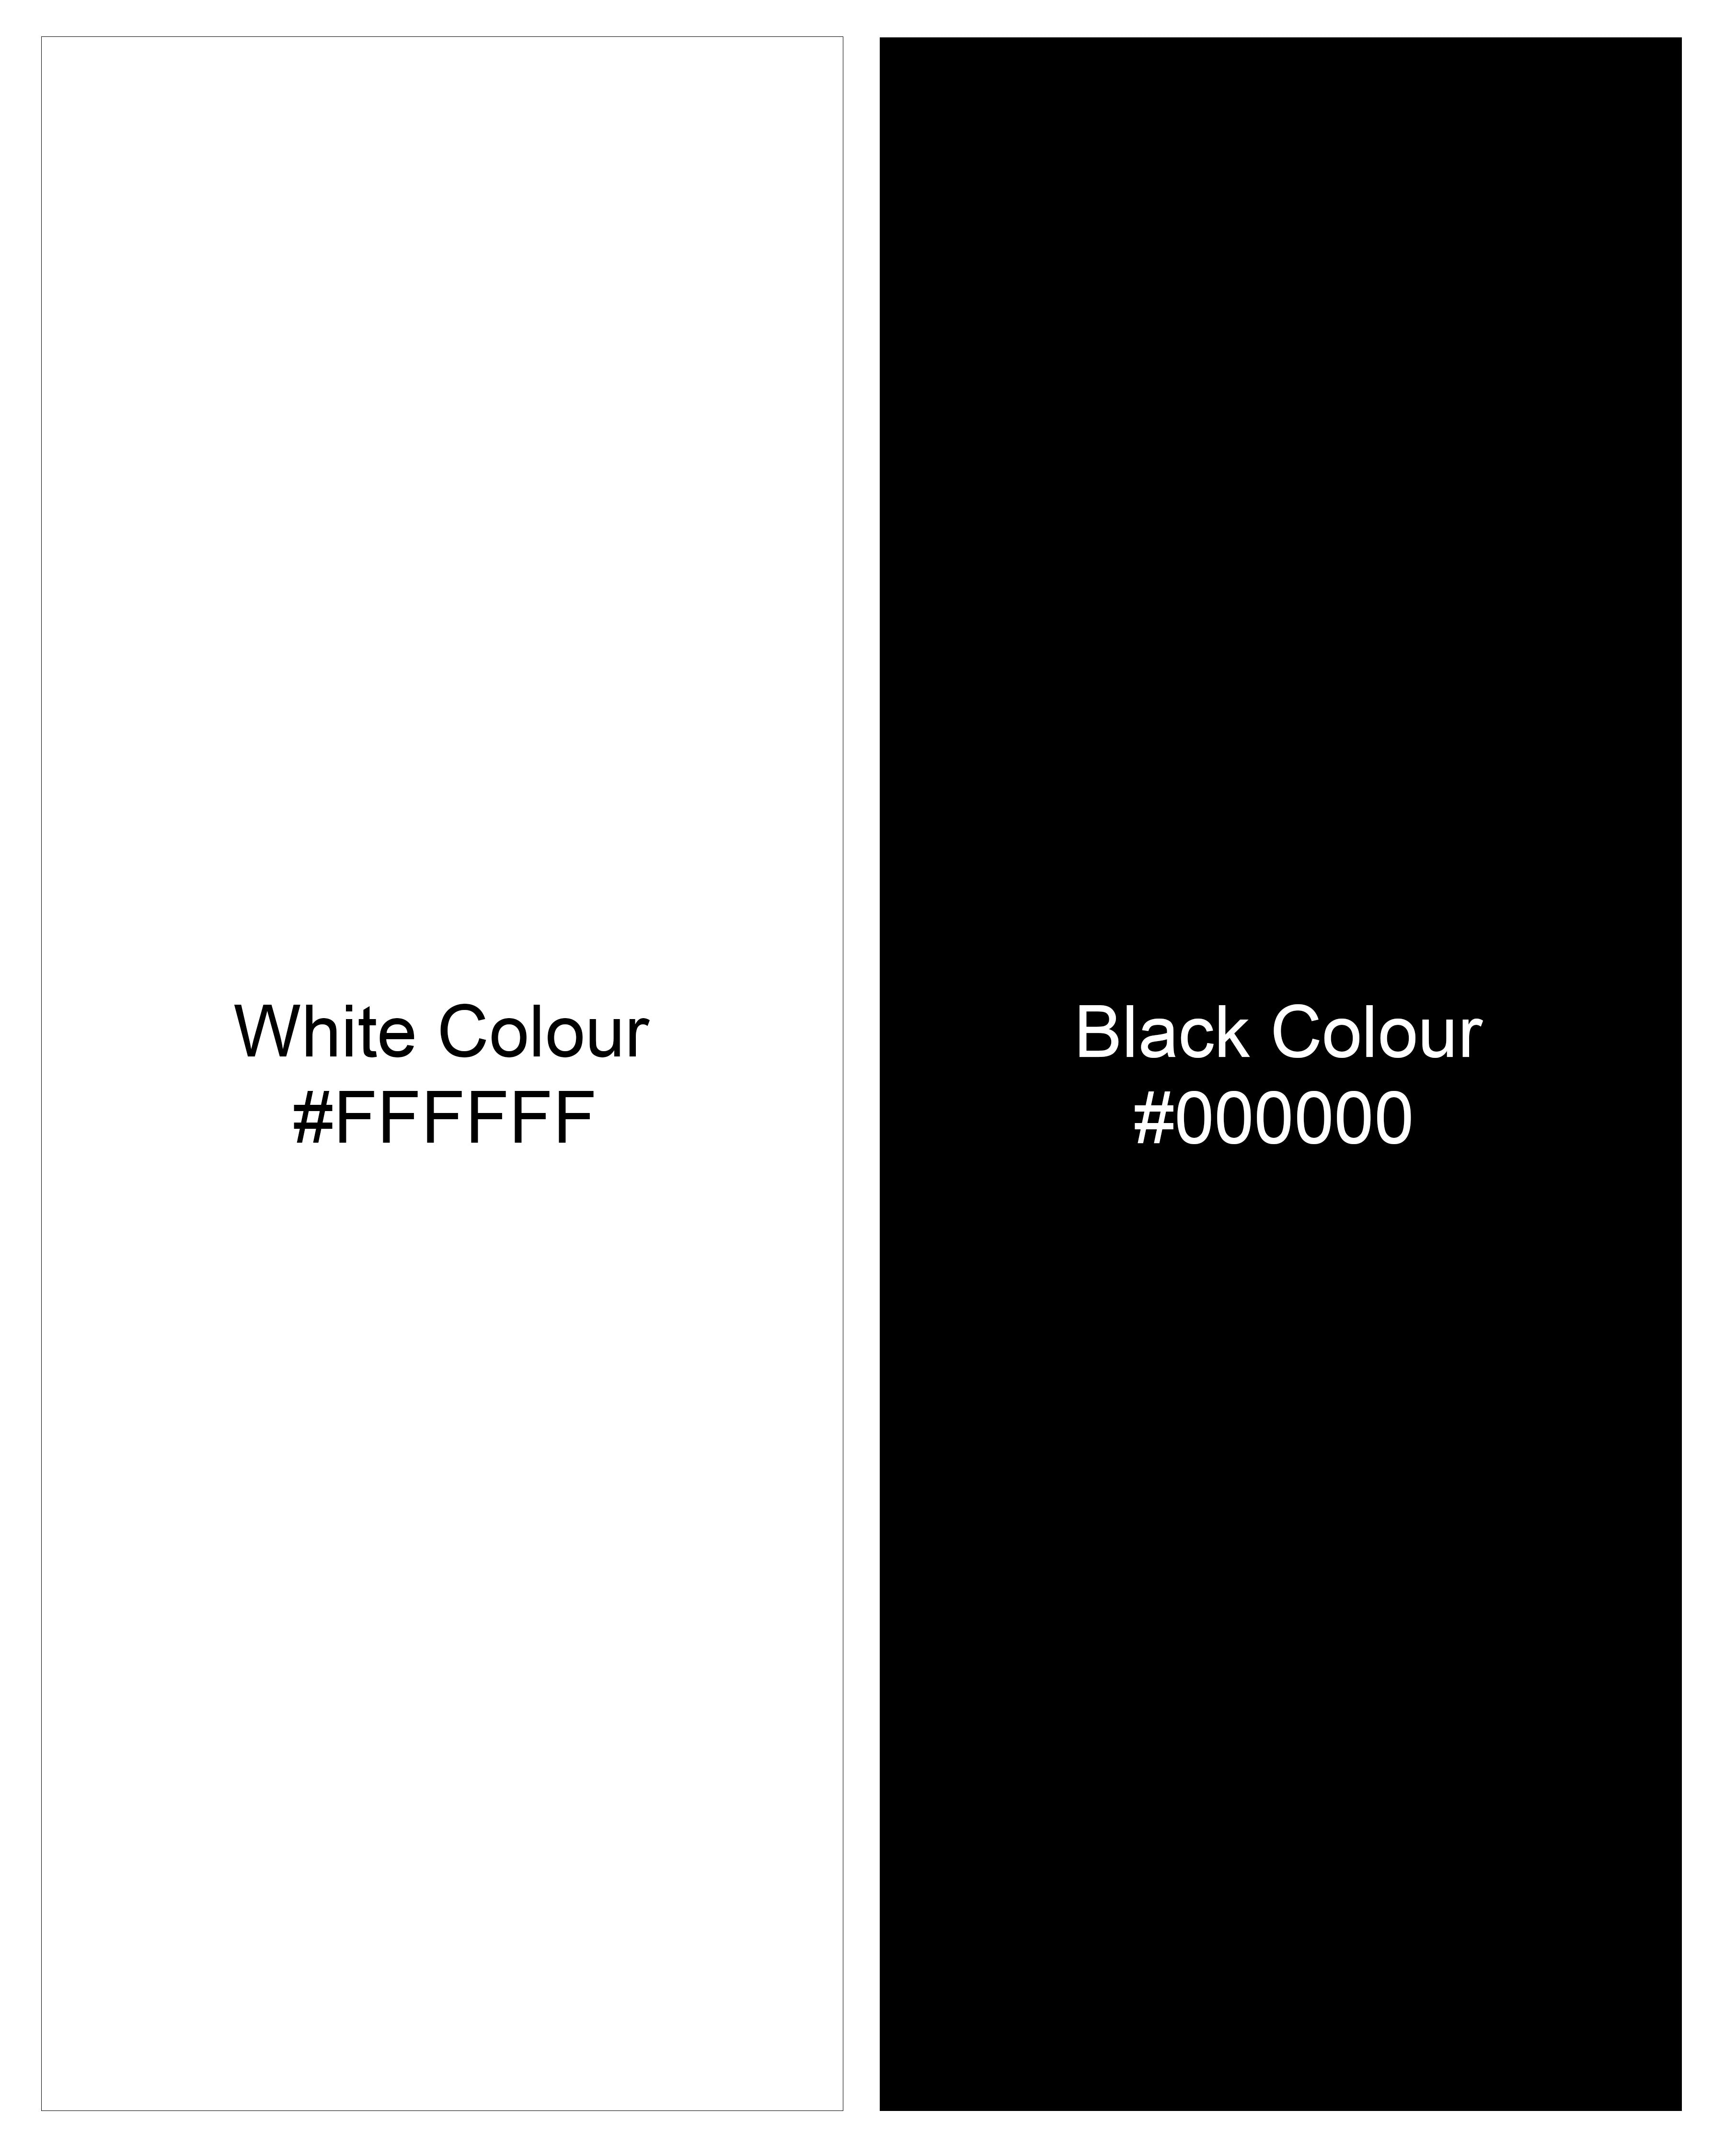 Jade Black with Bright White Checkered Super Soft Premium Cotton Designer Shirt 9766-BD-BLK-P445-38, 9766-BD-BLK-P445-H-38, 9766-BD-BLK-P445-39, 9766-BD-BLK-P445-H-39, 9766-BD-BLK-P445-40, 9766-BD-BLK-P445-H-40, 9766-BD-BLK-P445-42, 9766-BD-BLK-P445-H-42, 9766-BD-BLK-P445-44, 9766-BD-BLK-P445-H-44, 9766-BD-BLK-P445-46, 9766-BD-BLK-P445-H-46, 9766-BD-BLK-P445-48, 9766-BD-BLK-P445-H-48, 9766-BD-BLK-P445-50, 9766-BD-BLK-P445-H-50, 9766-BD-BLK-P445-52, 9766-BD-BLK-P445-H-52